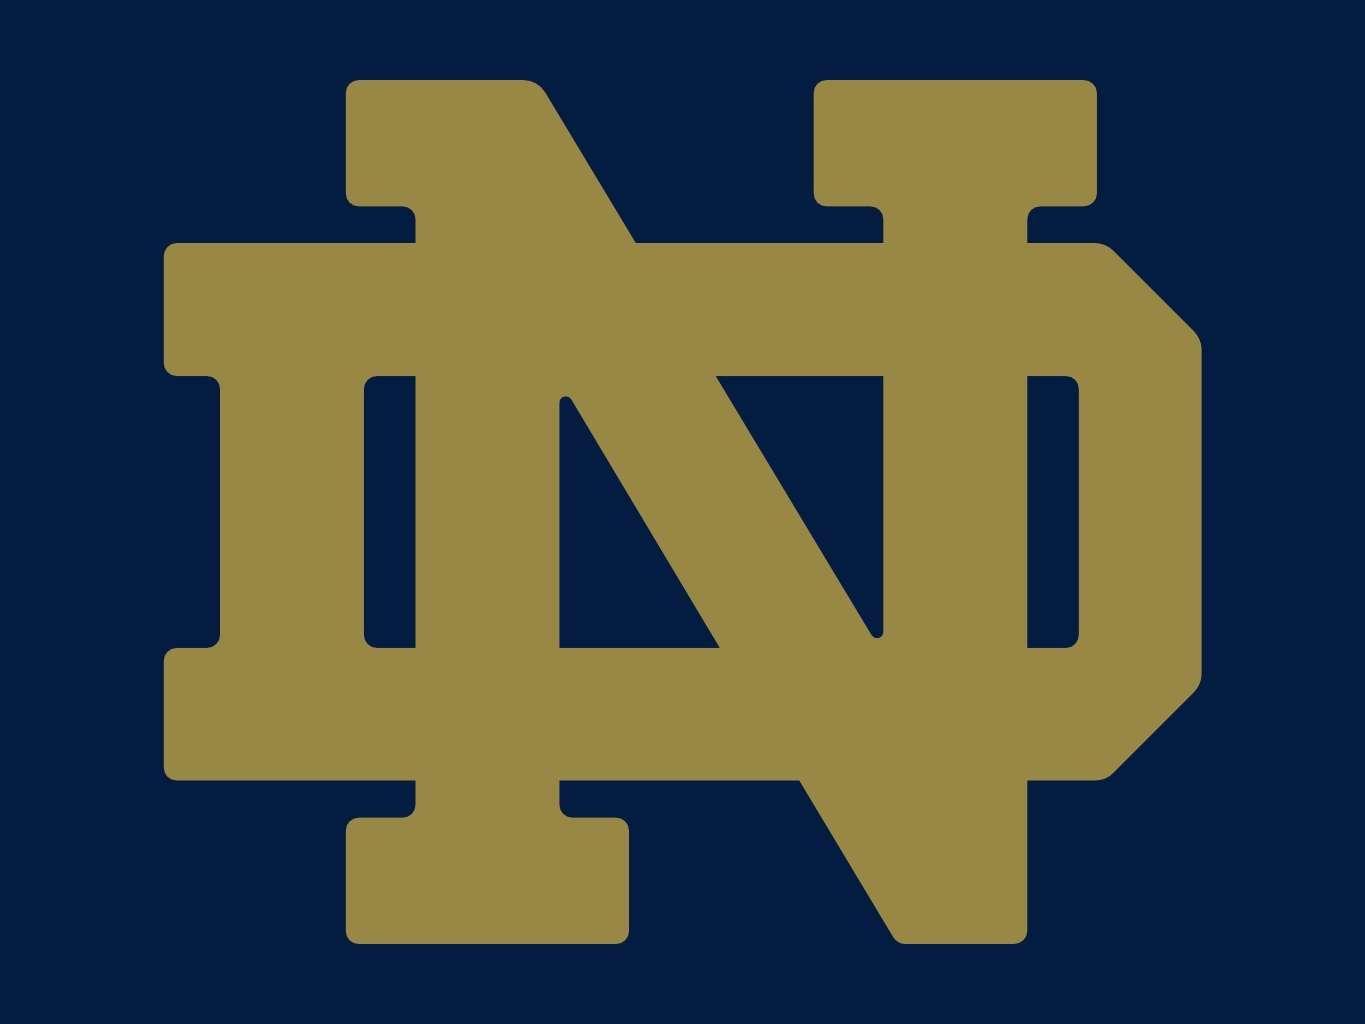 Notre Dame Logo - Notre Dame Logo. The University of Notre Dame. Notre dame, Notre